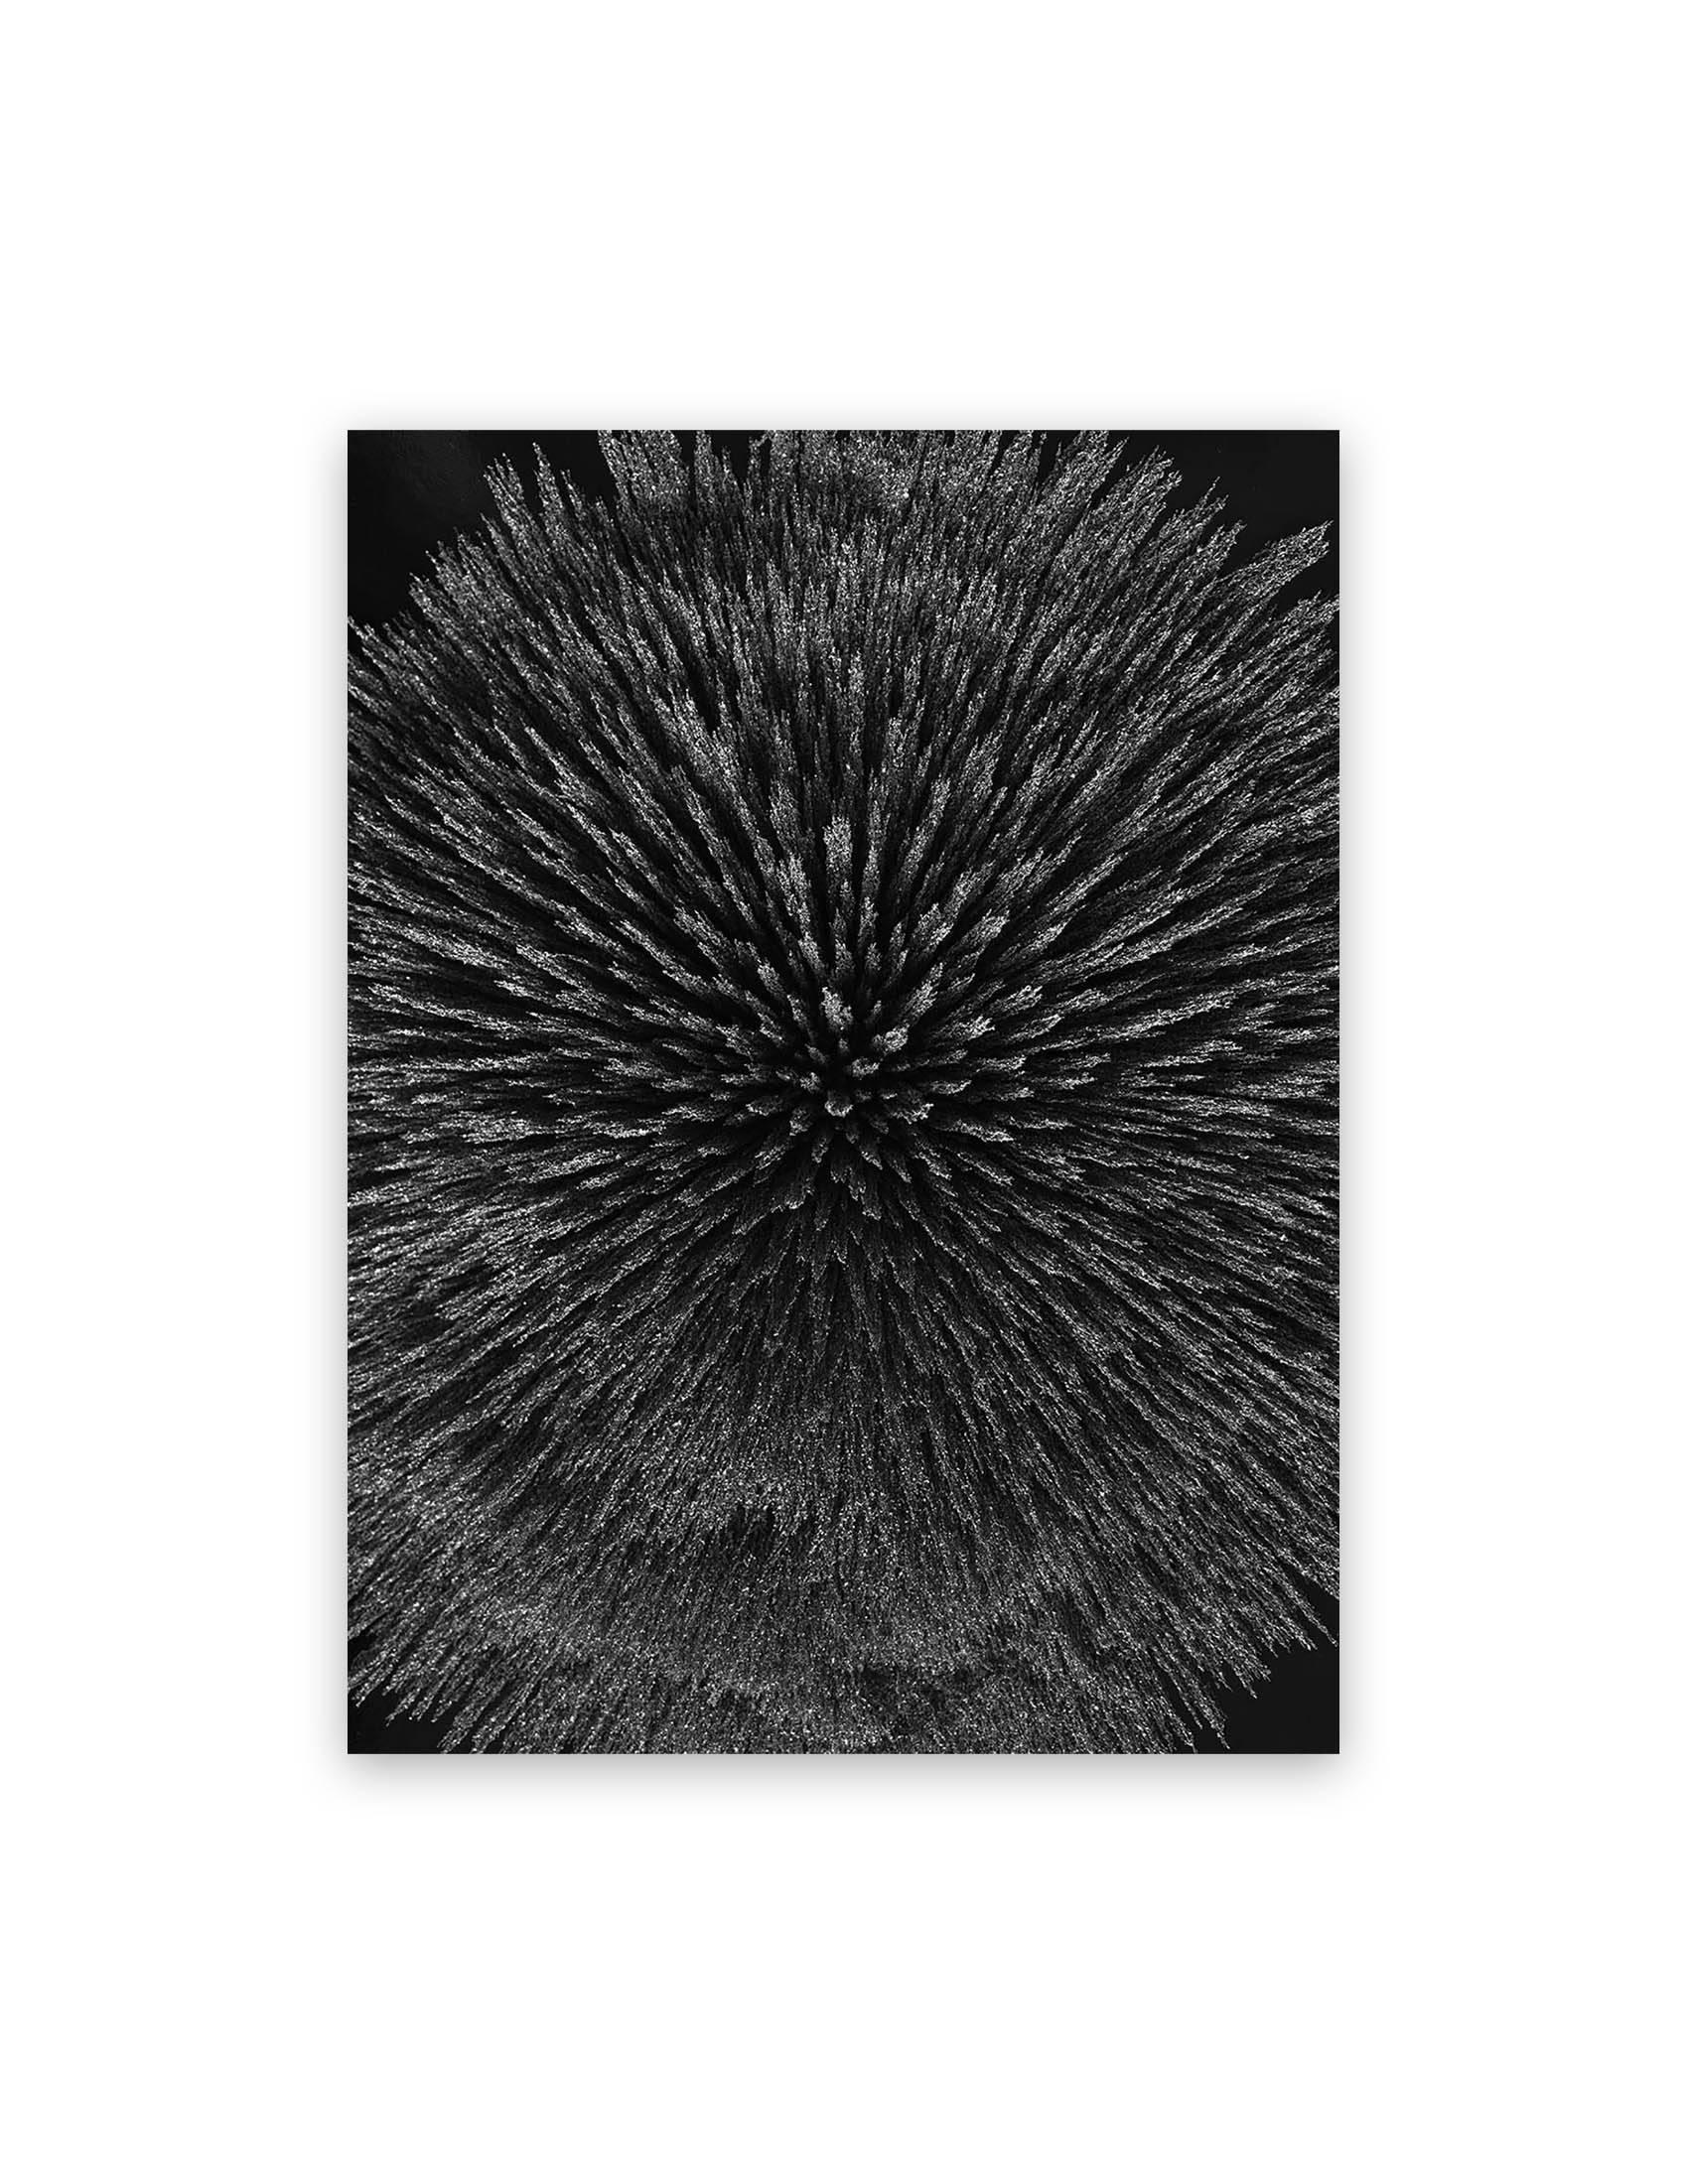 Seb Janiak Black and White Photograph - Magnetic radiation 99 (Medium) (Abstract photography)